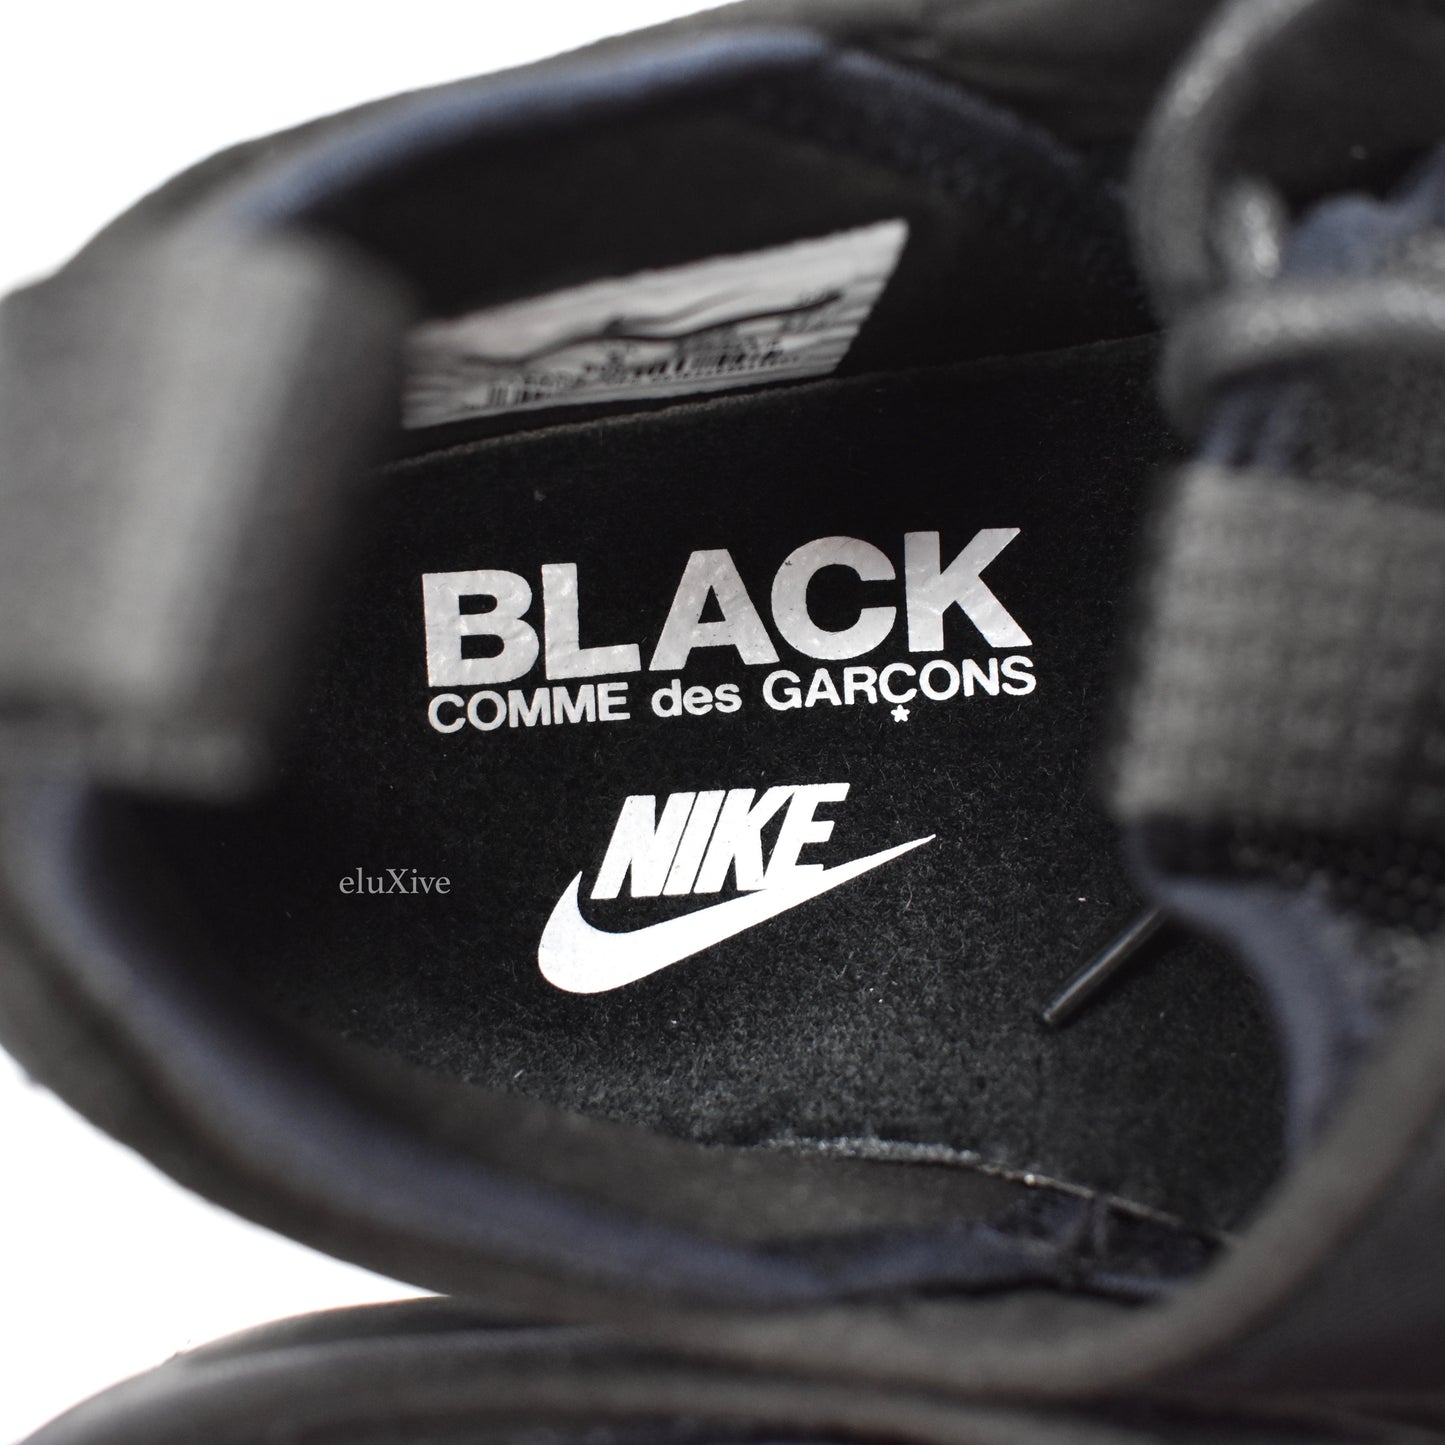 Comme des Garcons x Nike - CDG Black Air Footscape NM